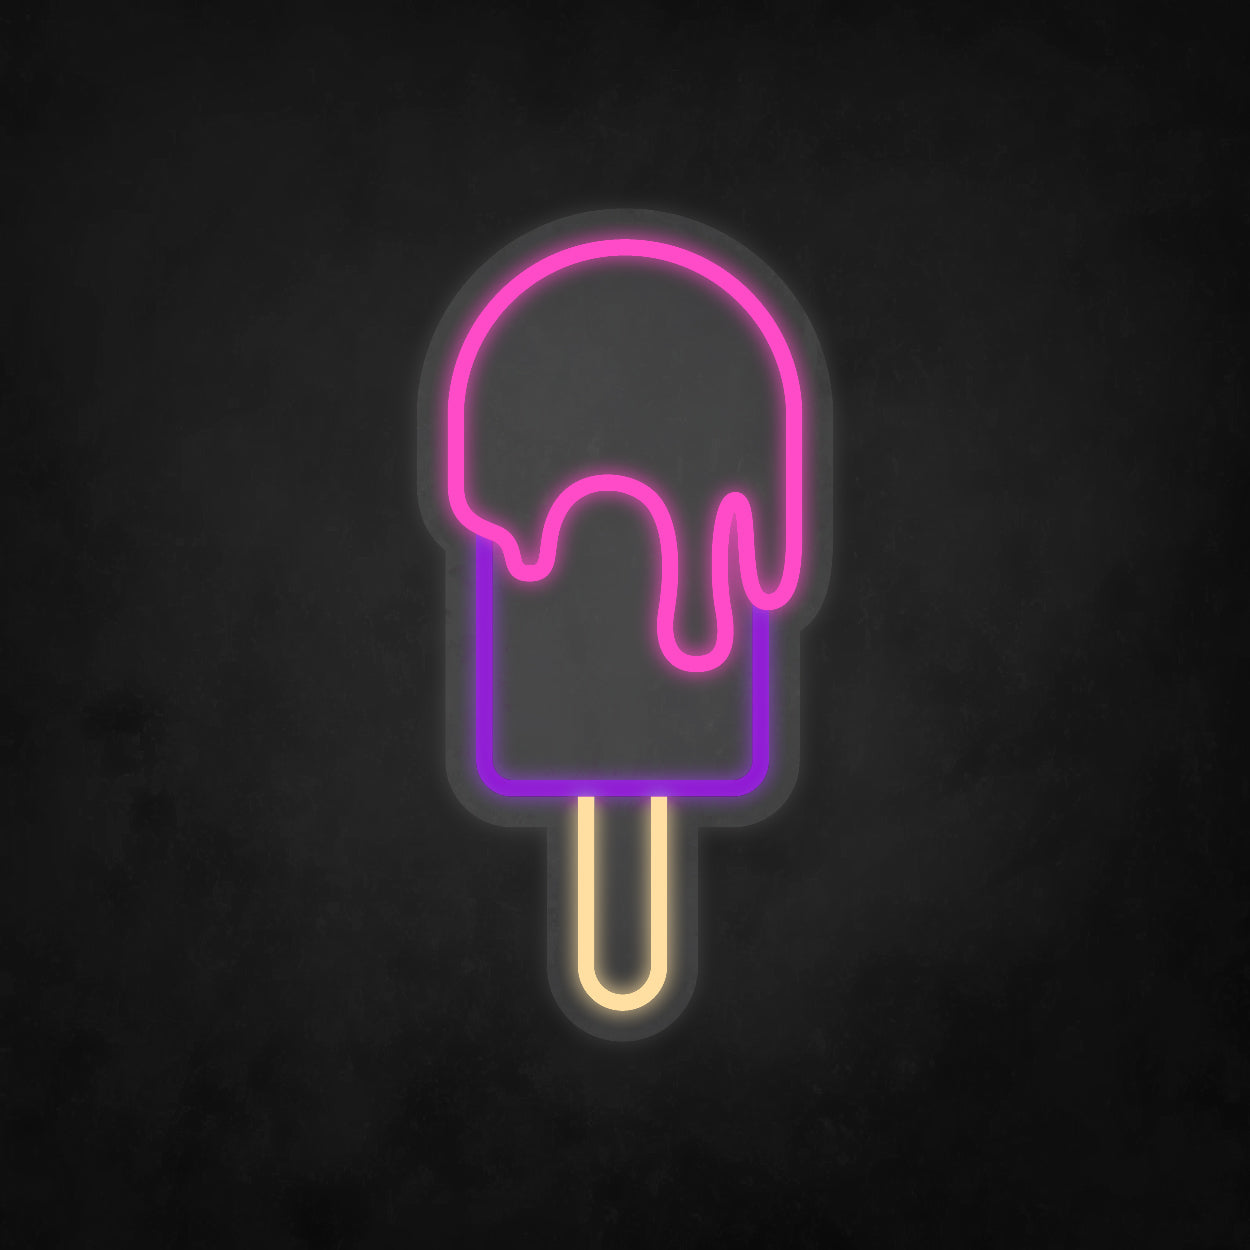 LED Neon Sign - Ice Cream - Stick